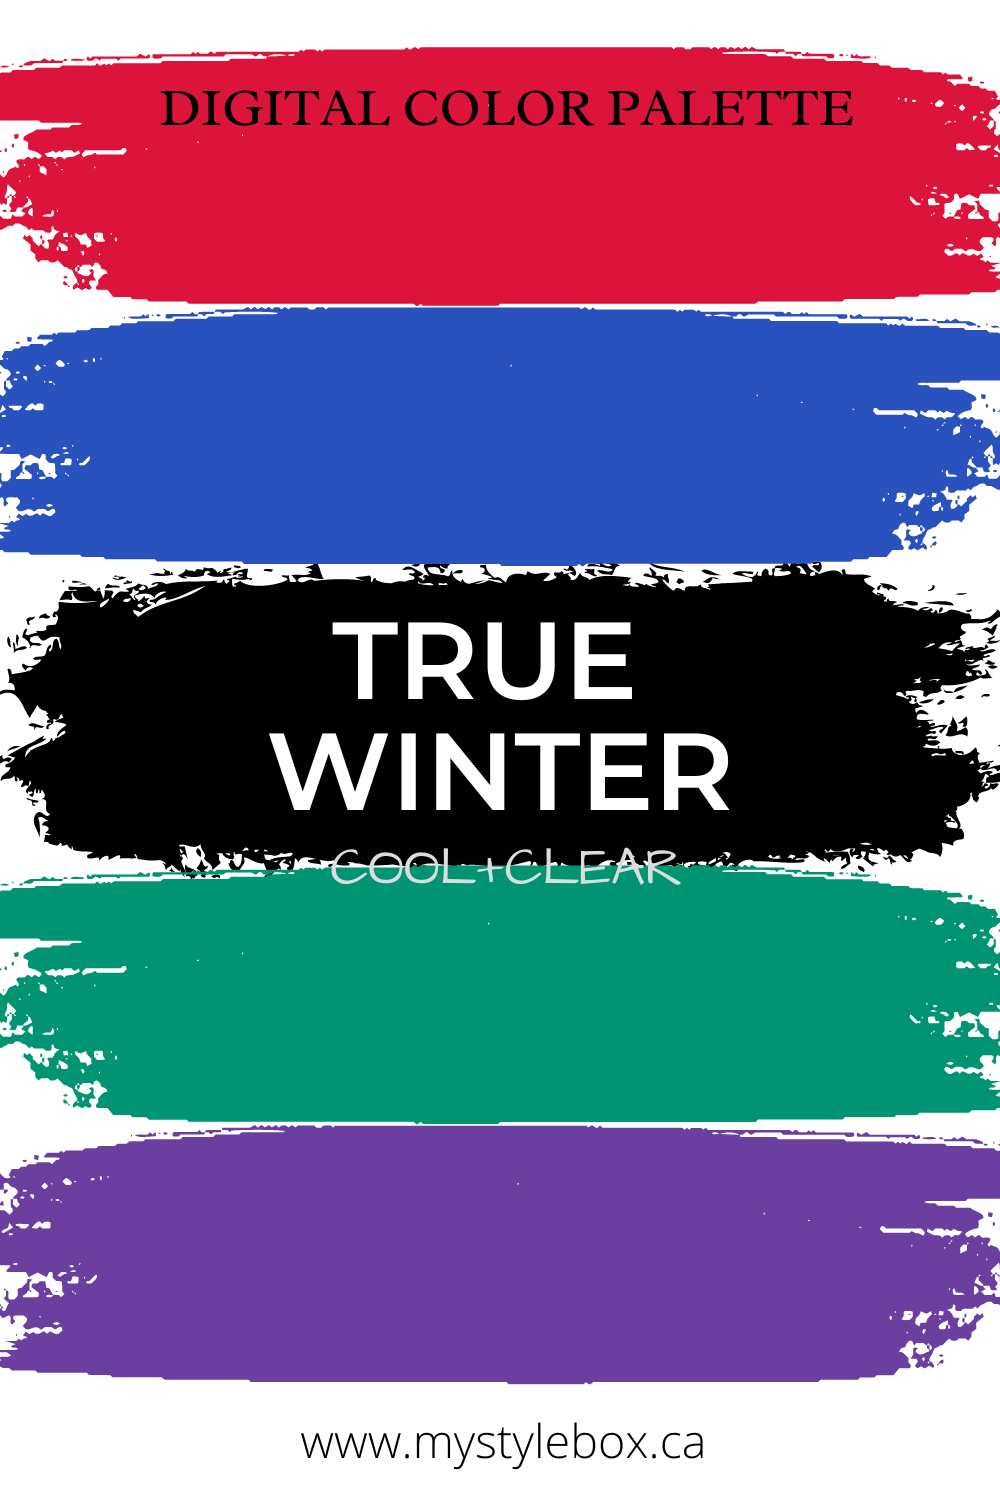 True (Cool) Winter Season Digital Color Palette